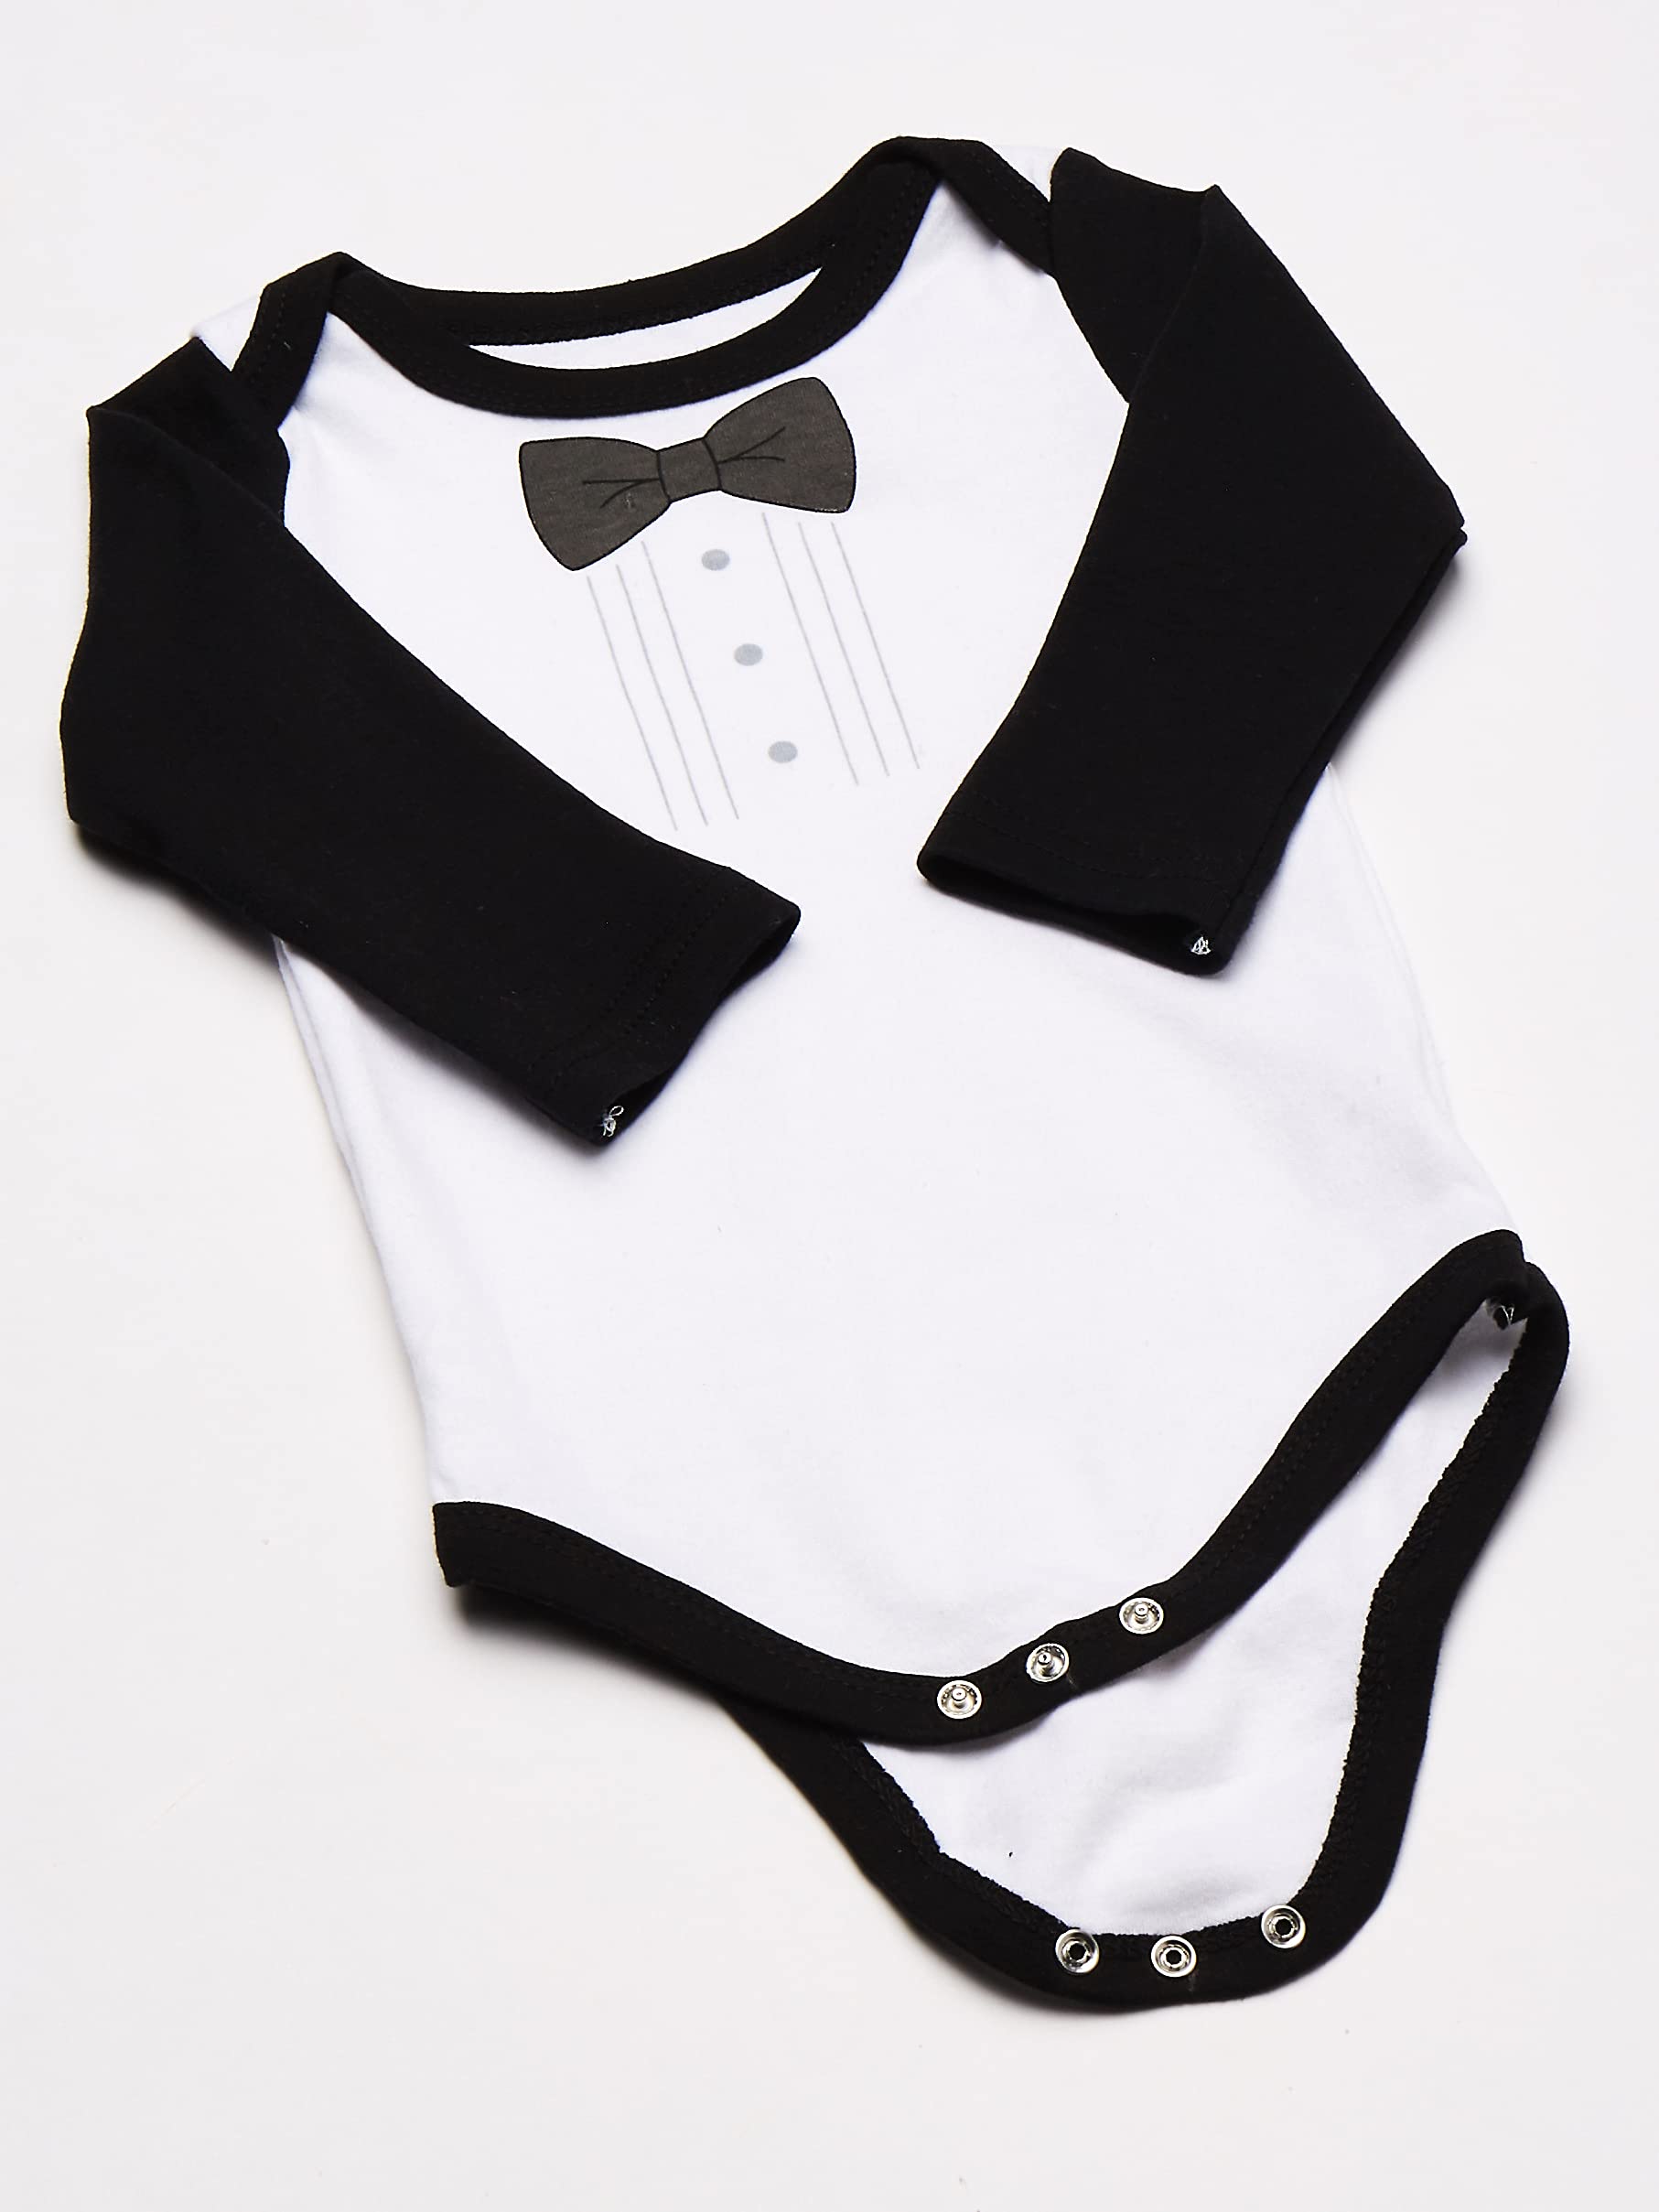 Hudson Baby unisex-baby Cotton Long-sleeve Bodysuits